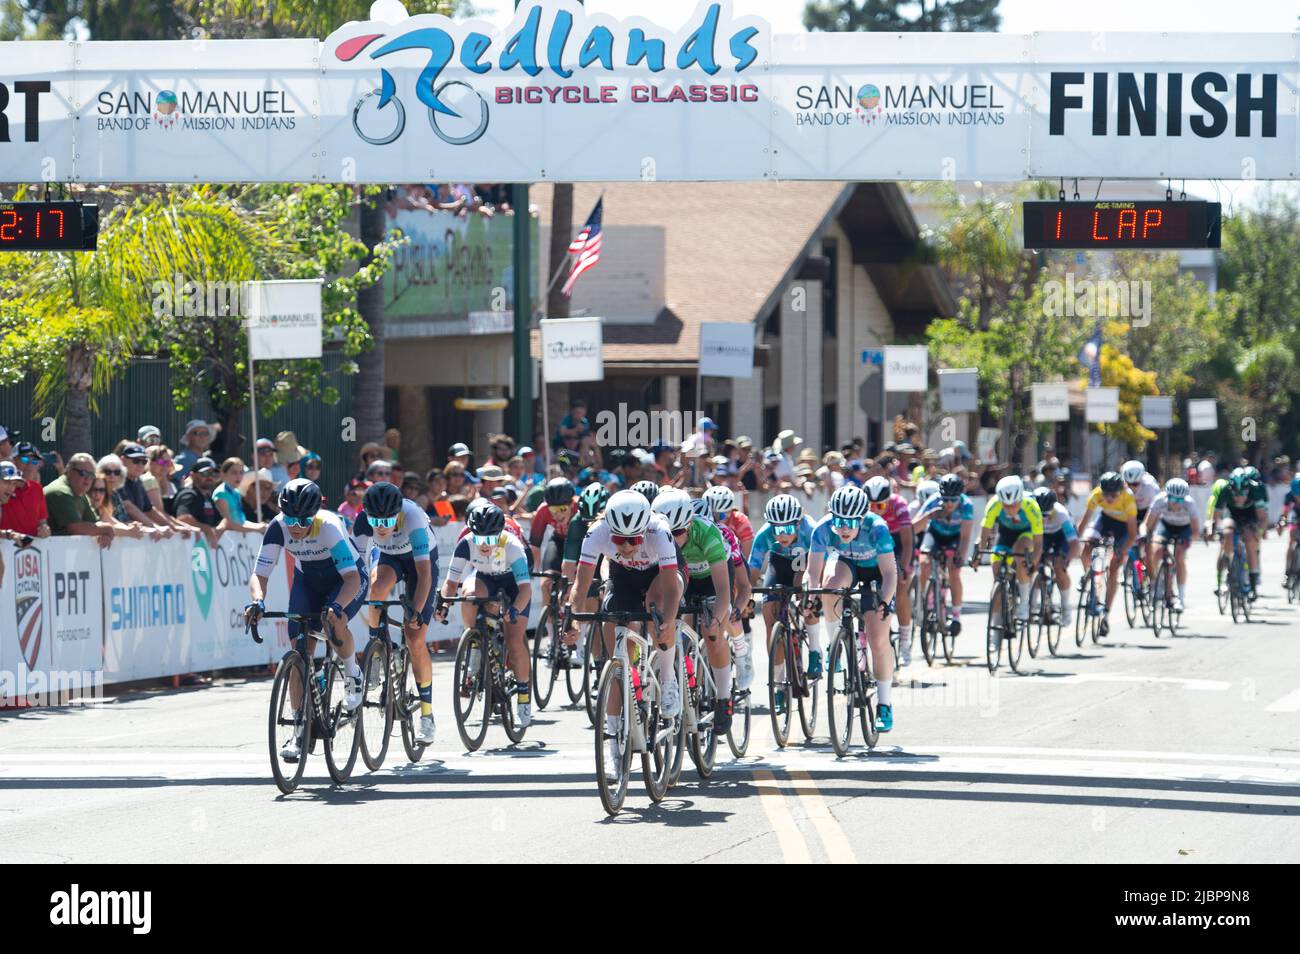 Women's peloton racing during the Redlands Classic Criterium in downtown Redlands, CA Stock Photo